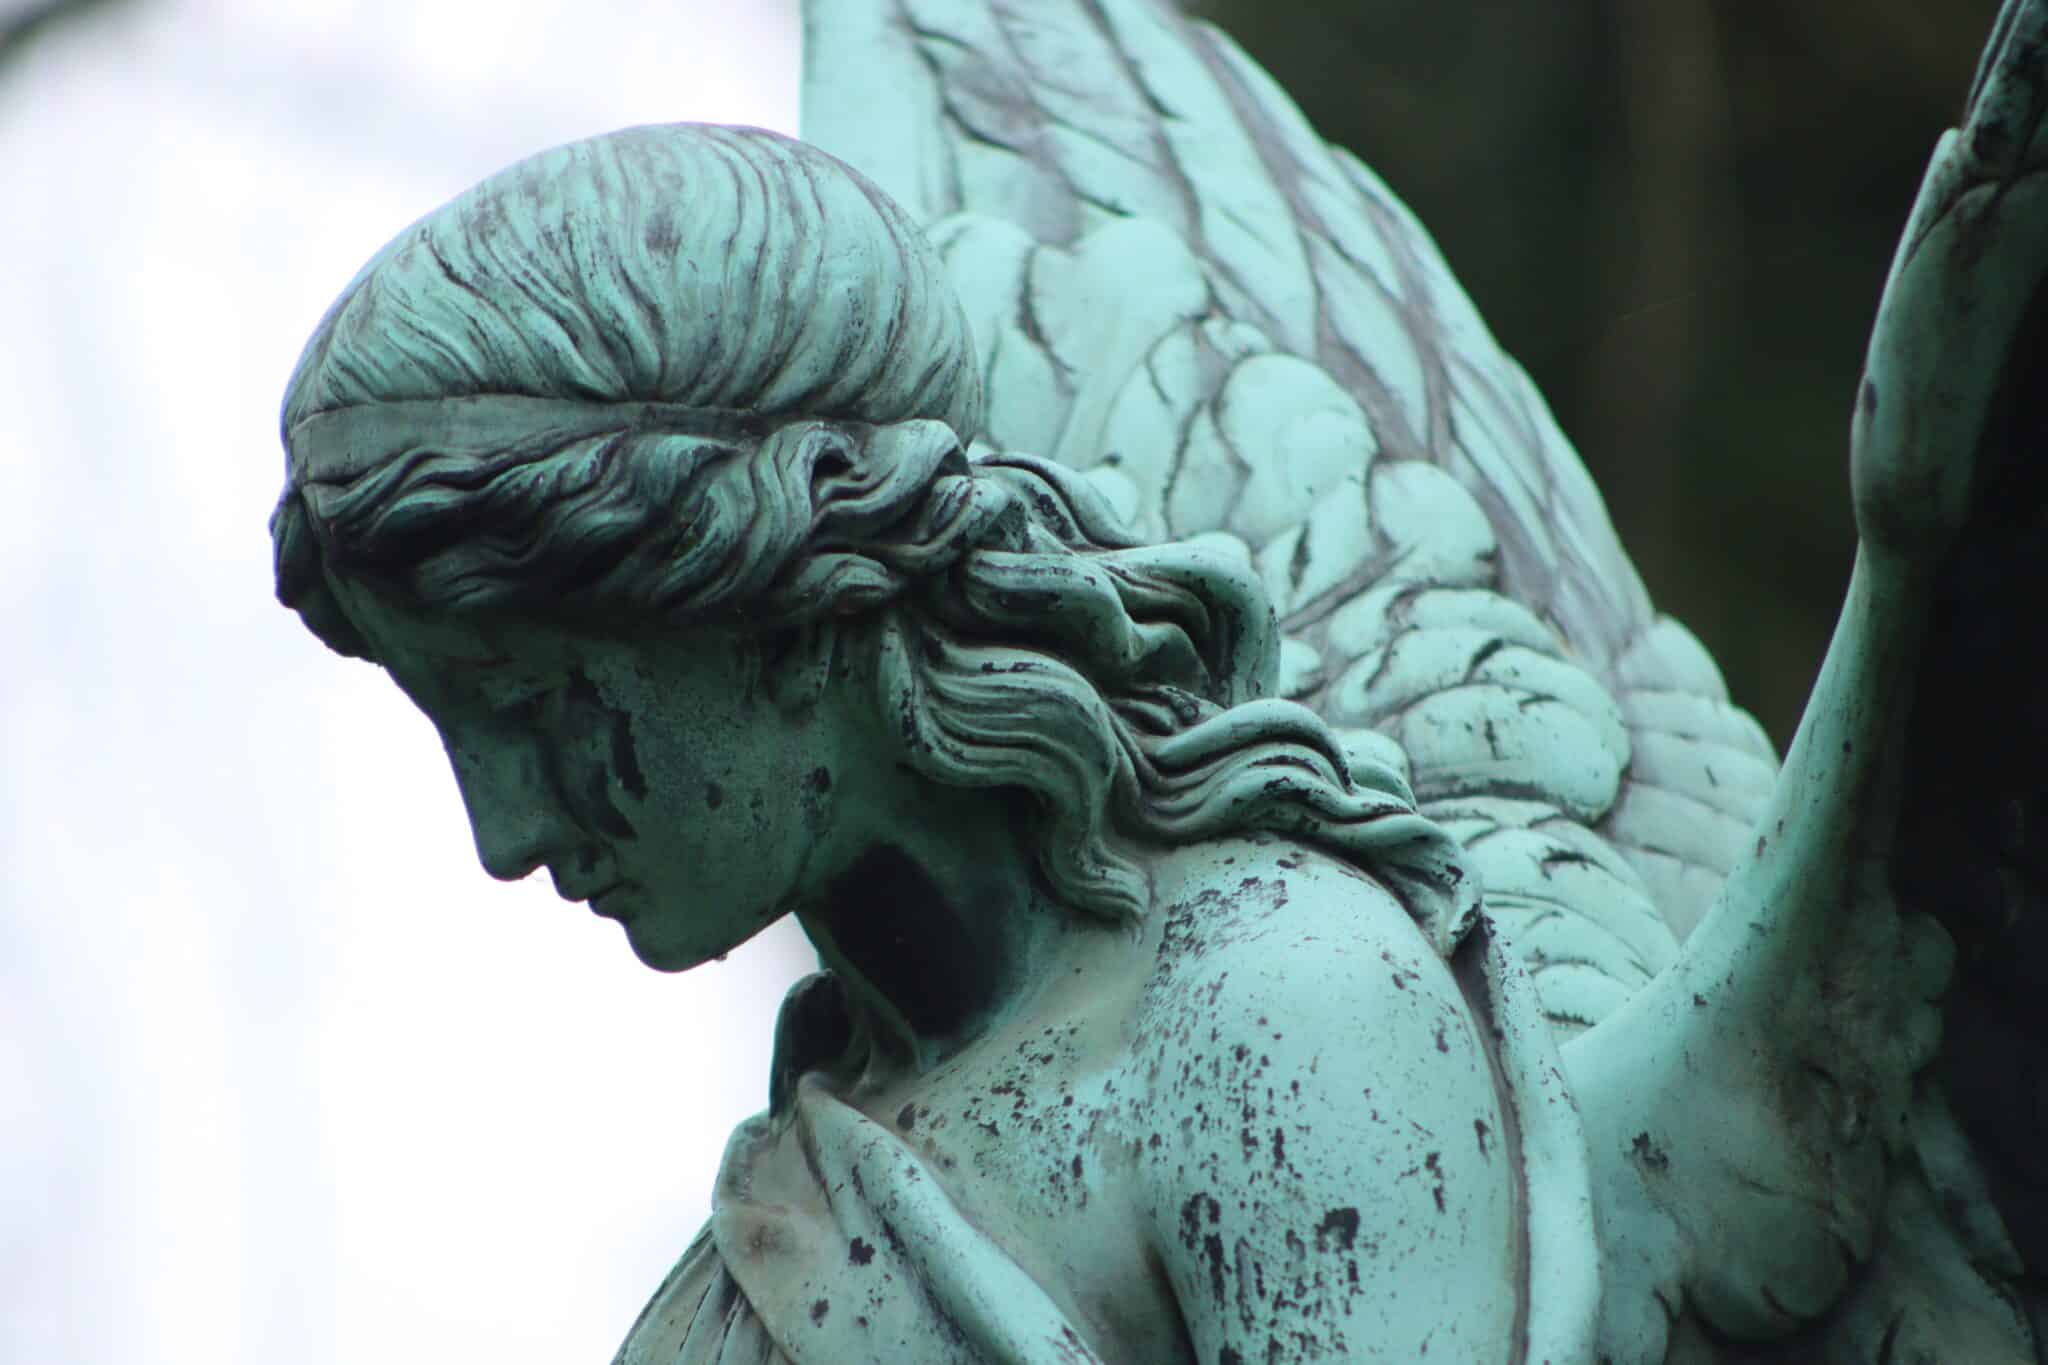 Angel in a cemetery. Via Unsplash